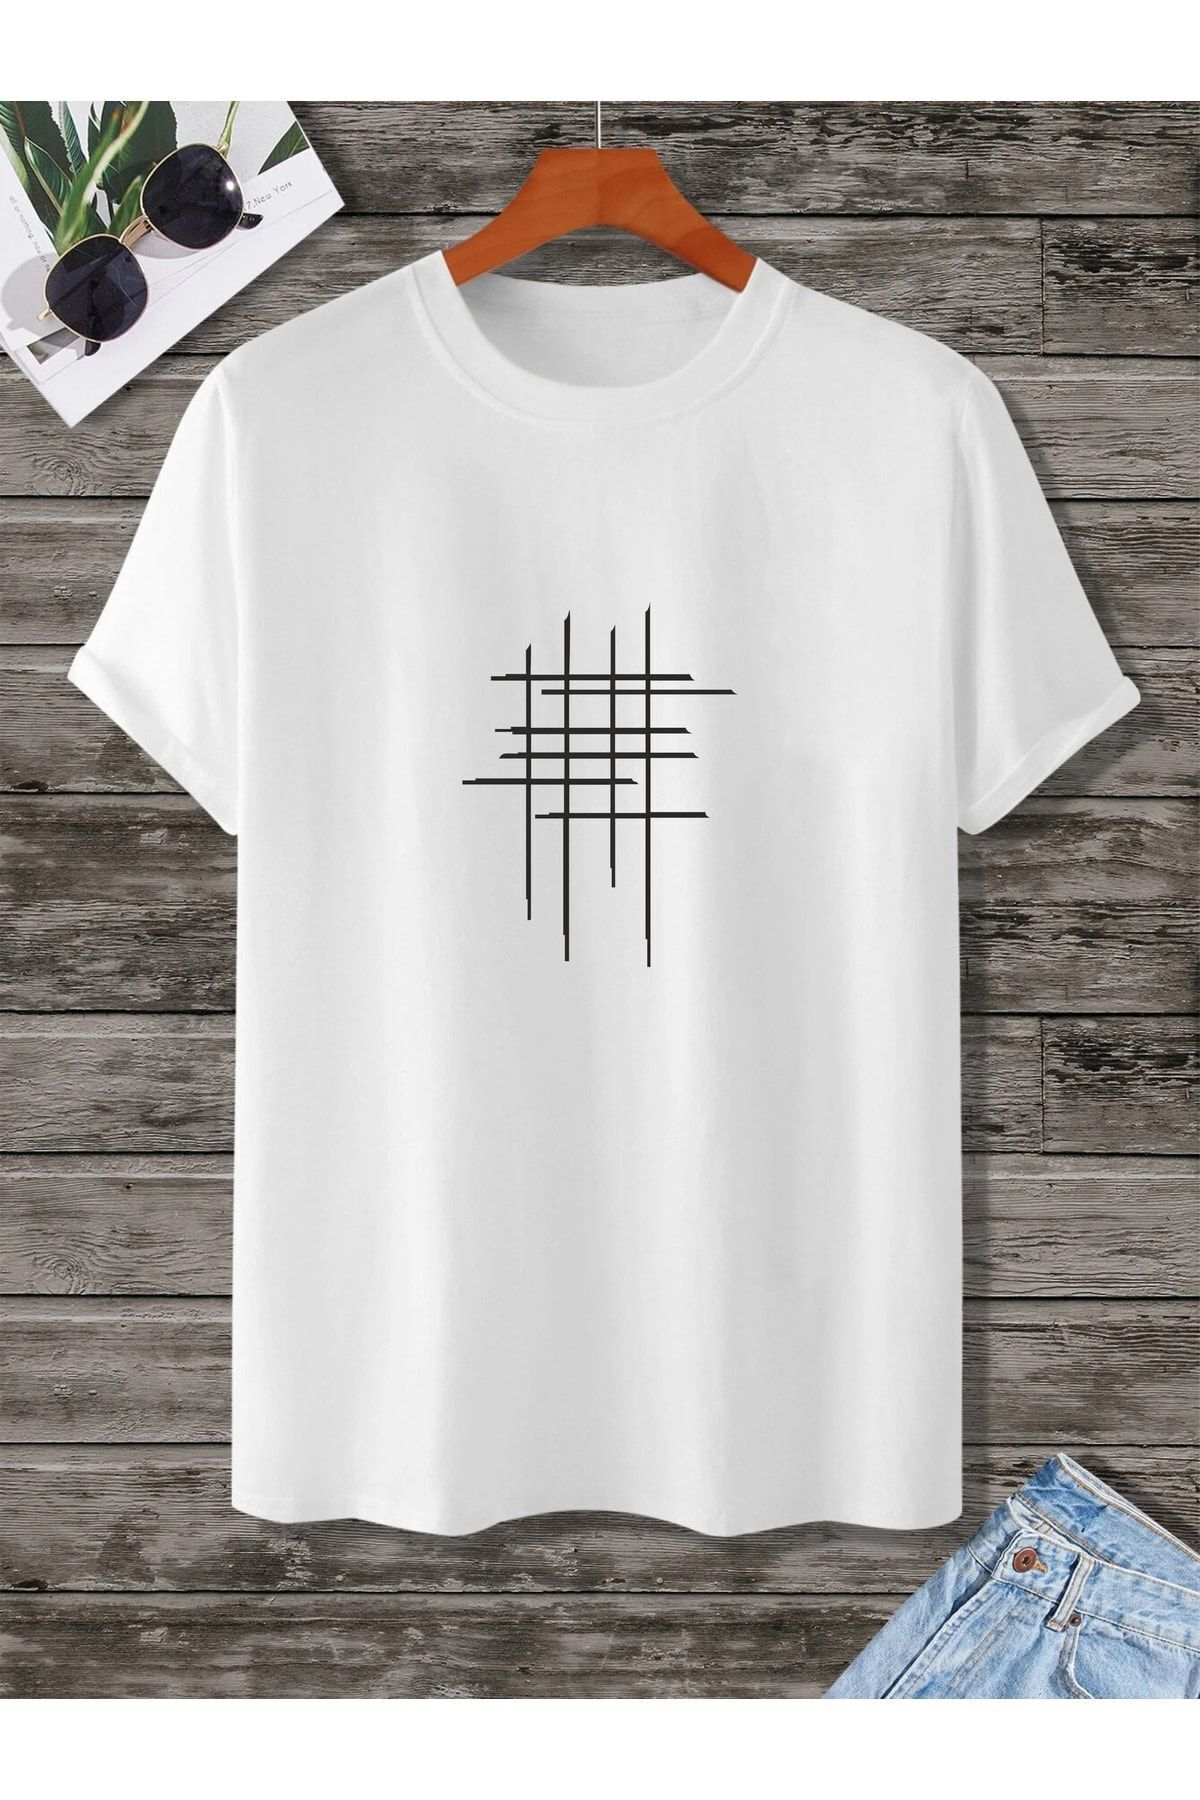 CMKTEKS Unisex Hashtag Beyaz Oversize Bisiklet Yaka Baskılı T-shirt